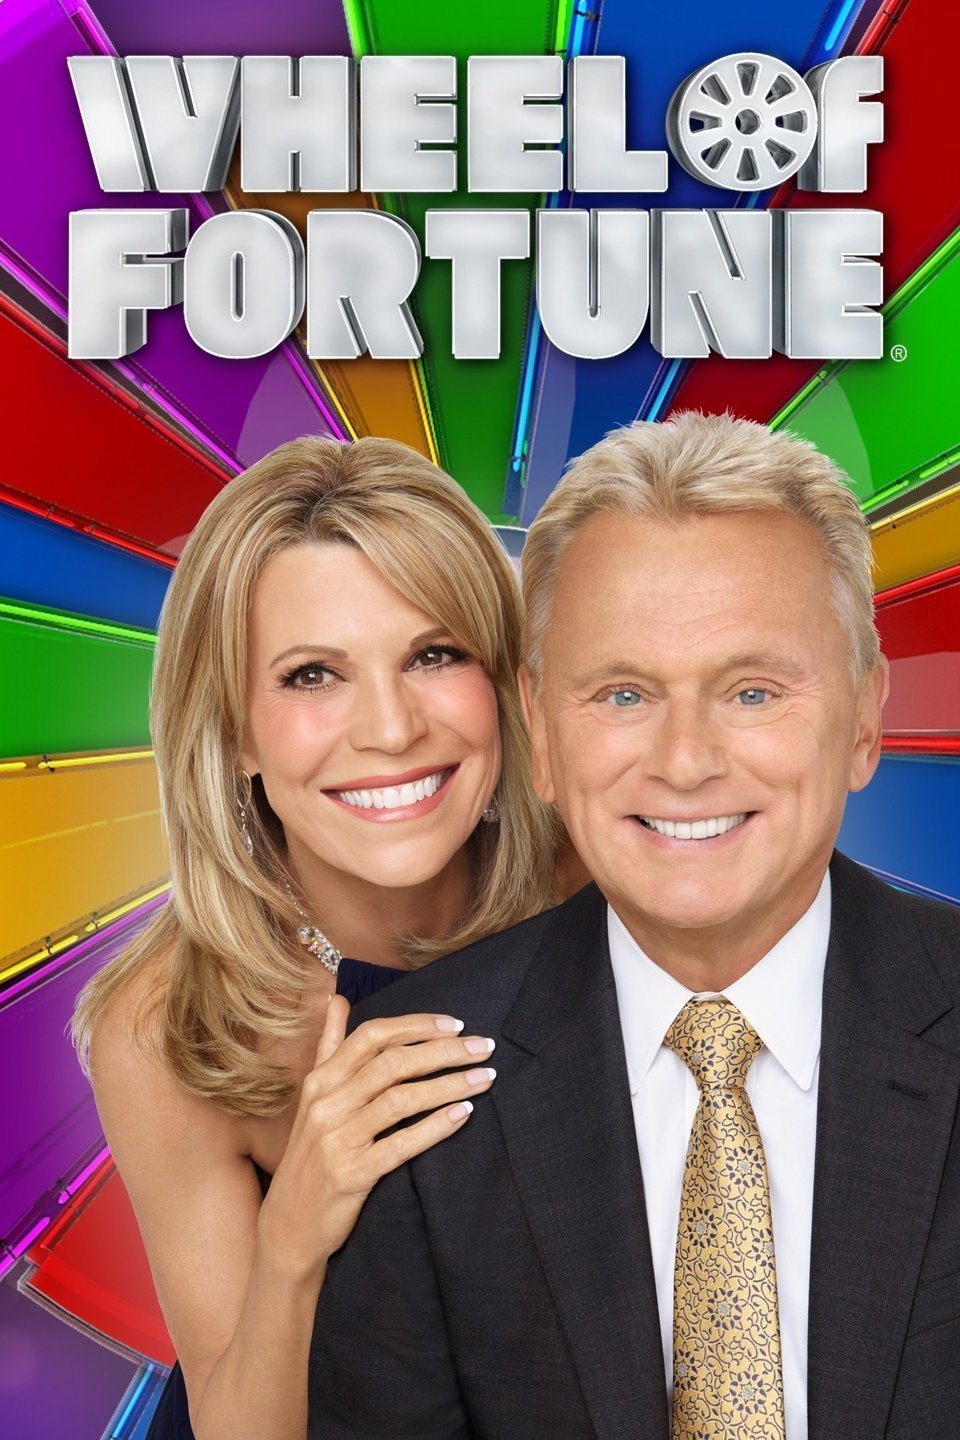 Wheel of fortune bonus round answer tonight